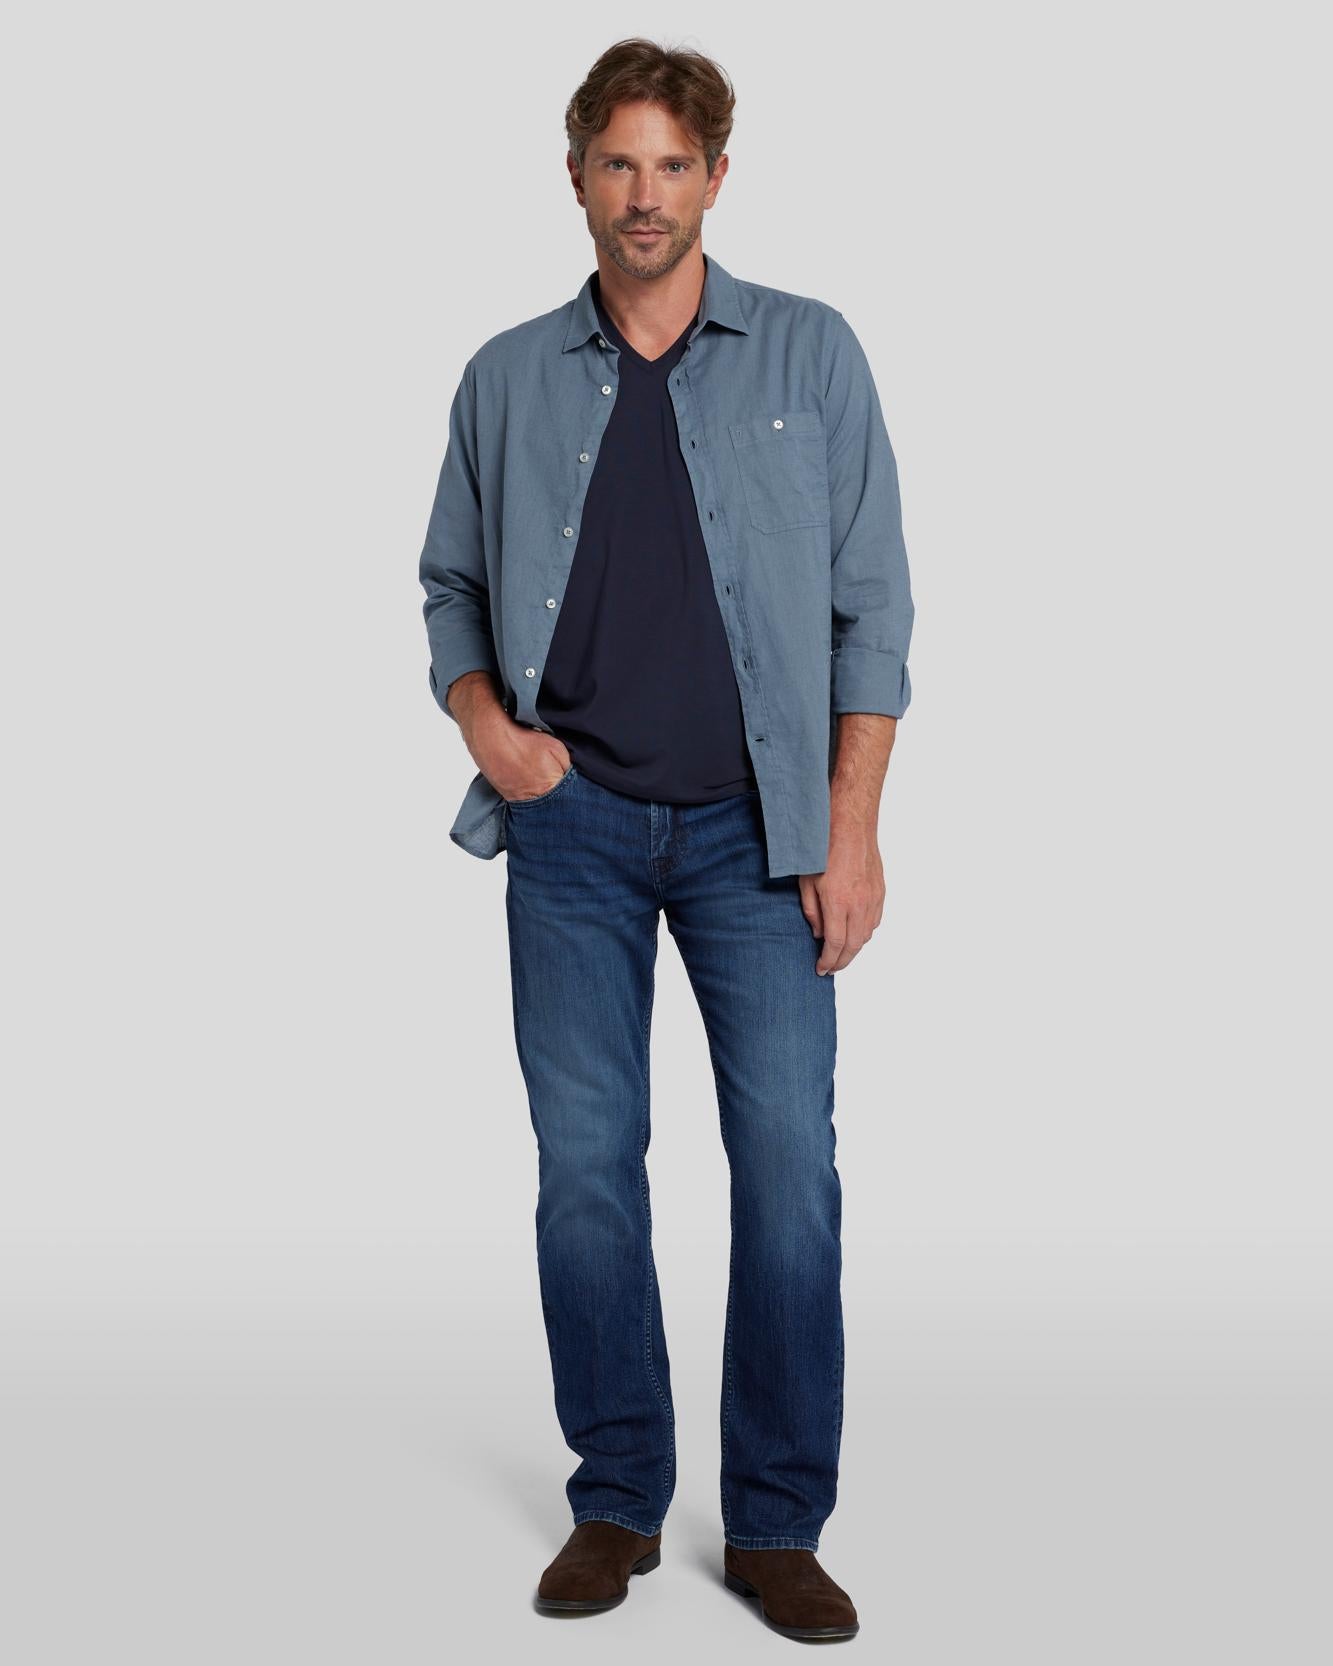 Most OFCL Jeans Men's Size 38 x 32 Straight Leg 5 Pocket Design Blue Denim